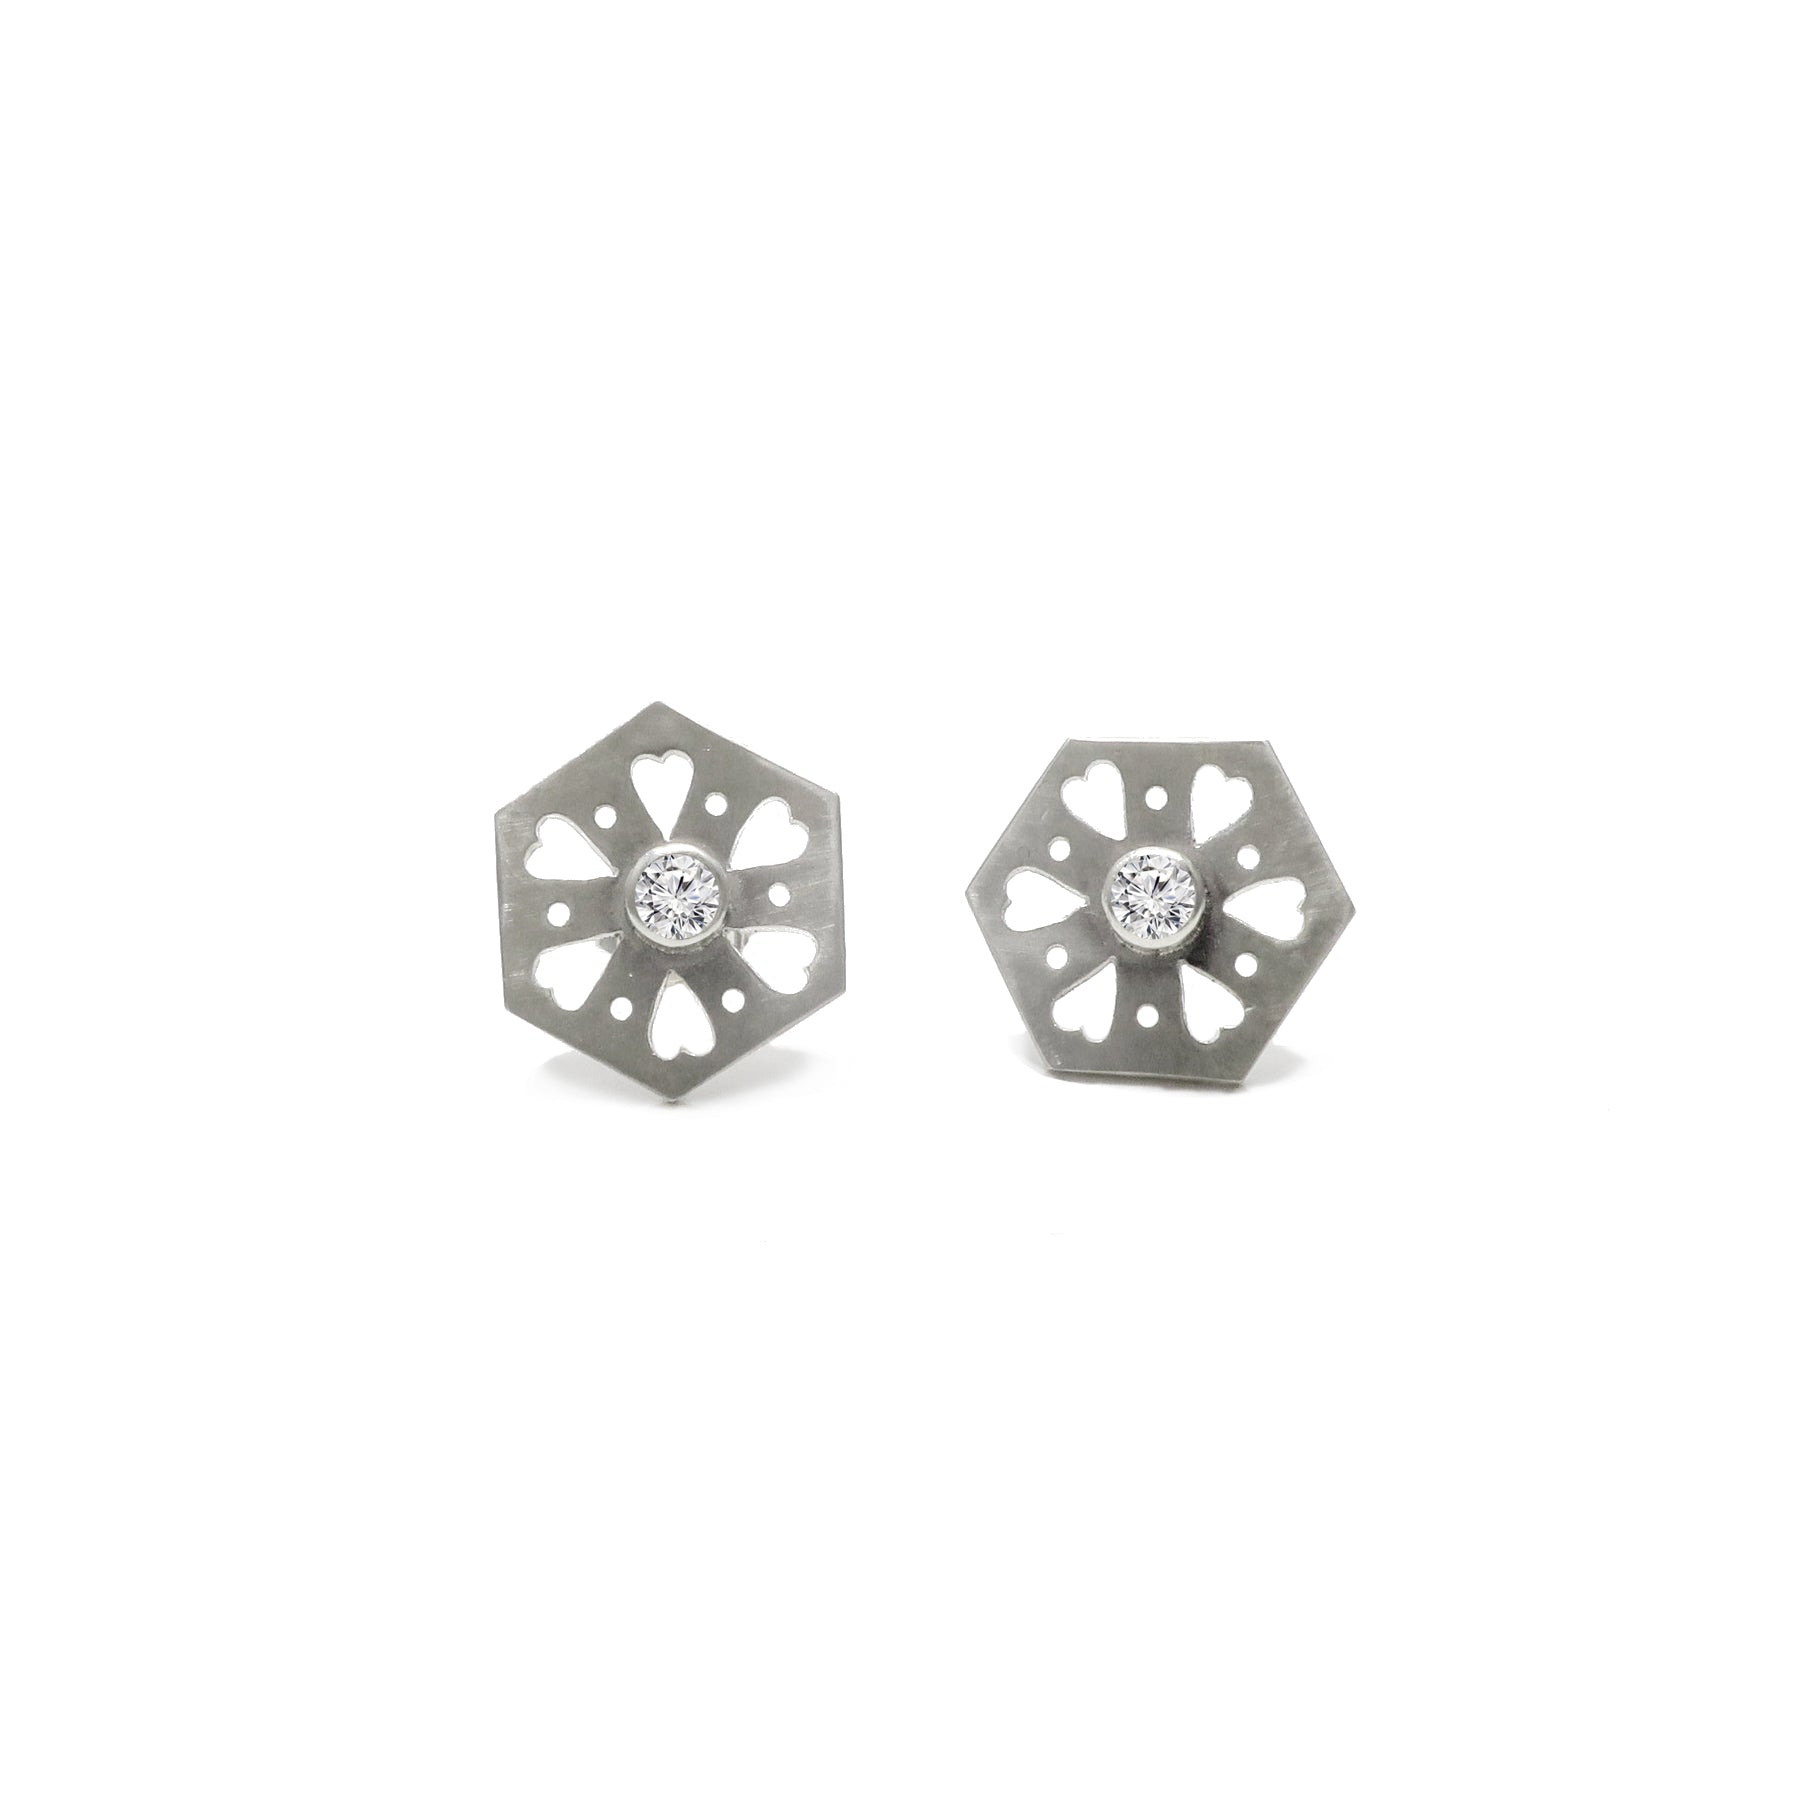 Hexagon Tile Heart Stud Earrings